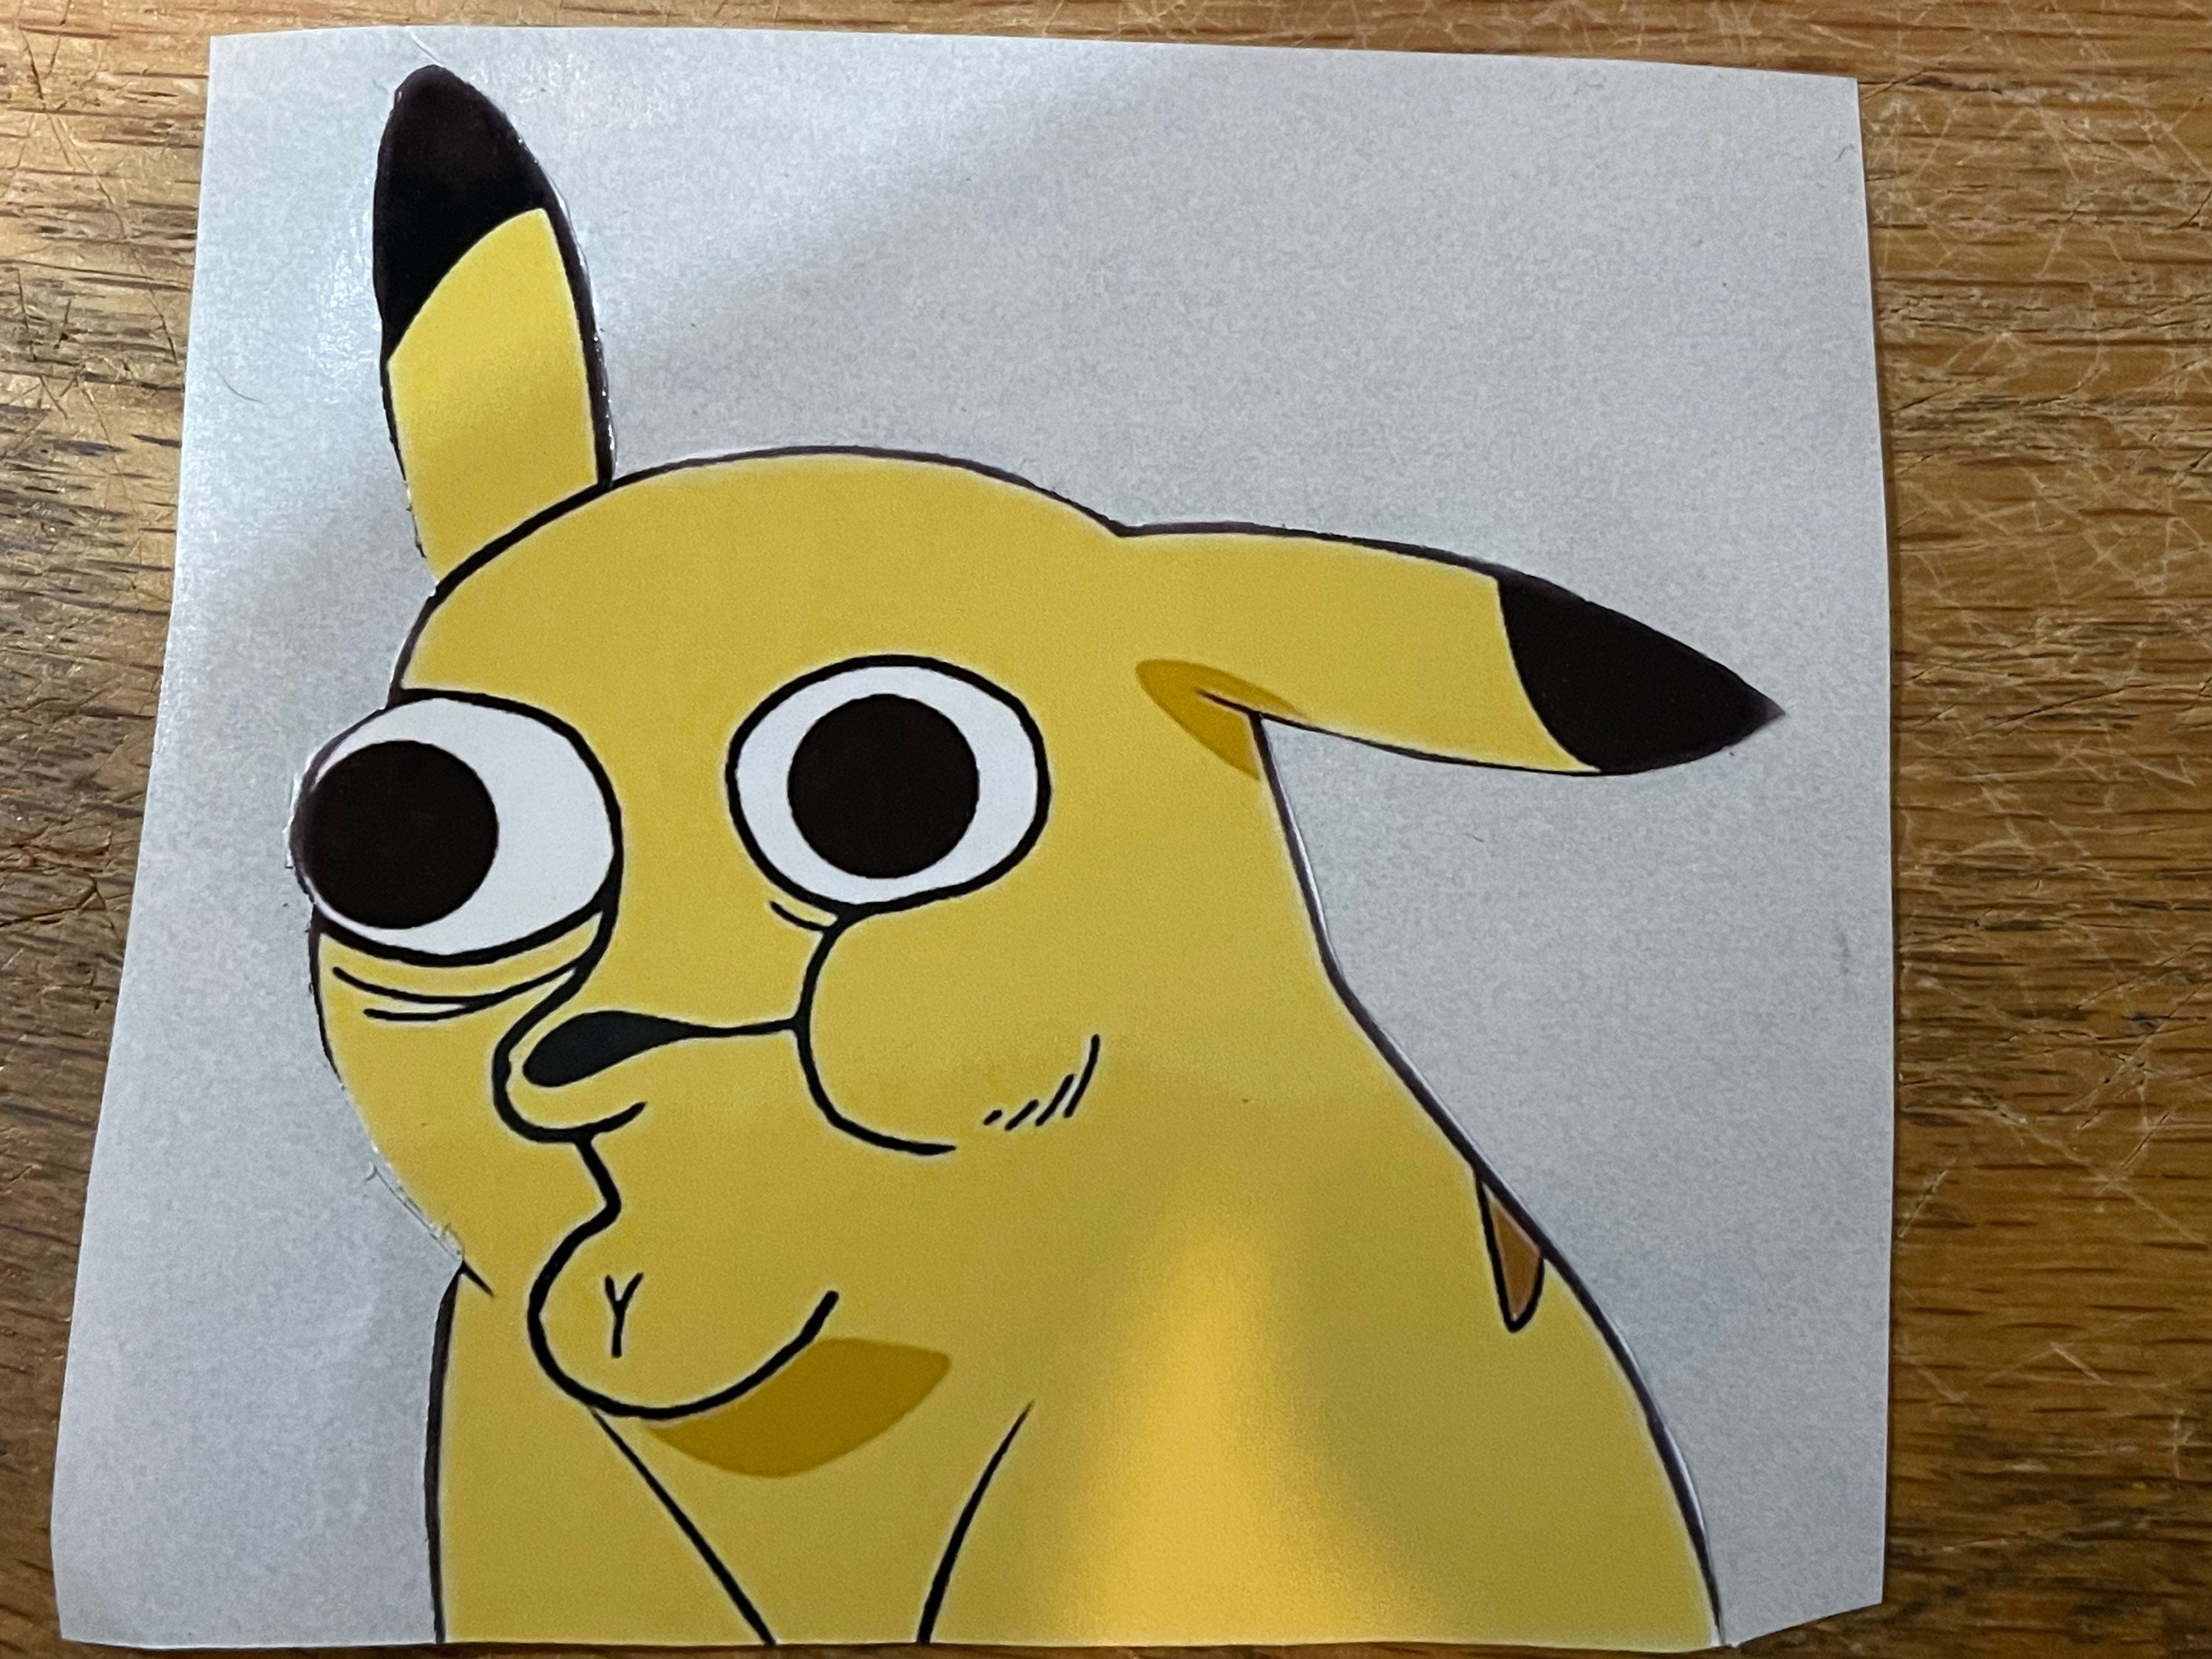 Surprised Pikachu Meme  Pikachu memes, Funny relatable memes